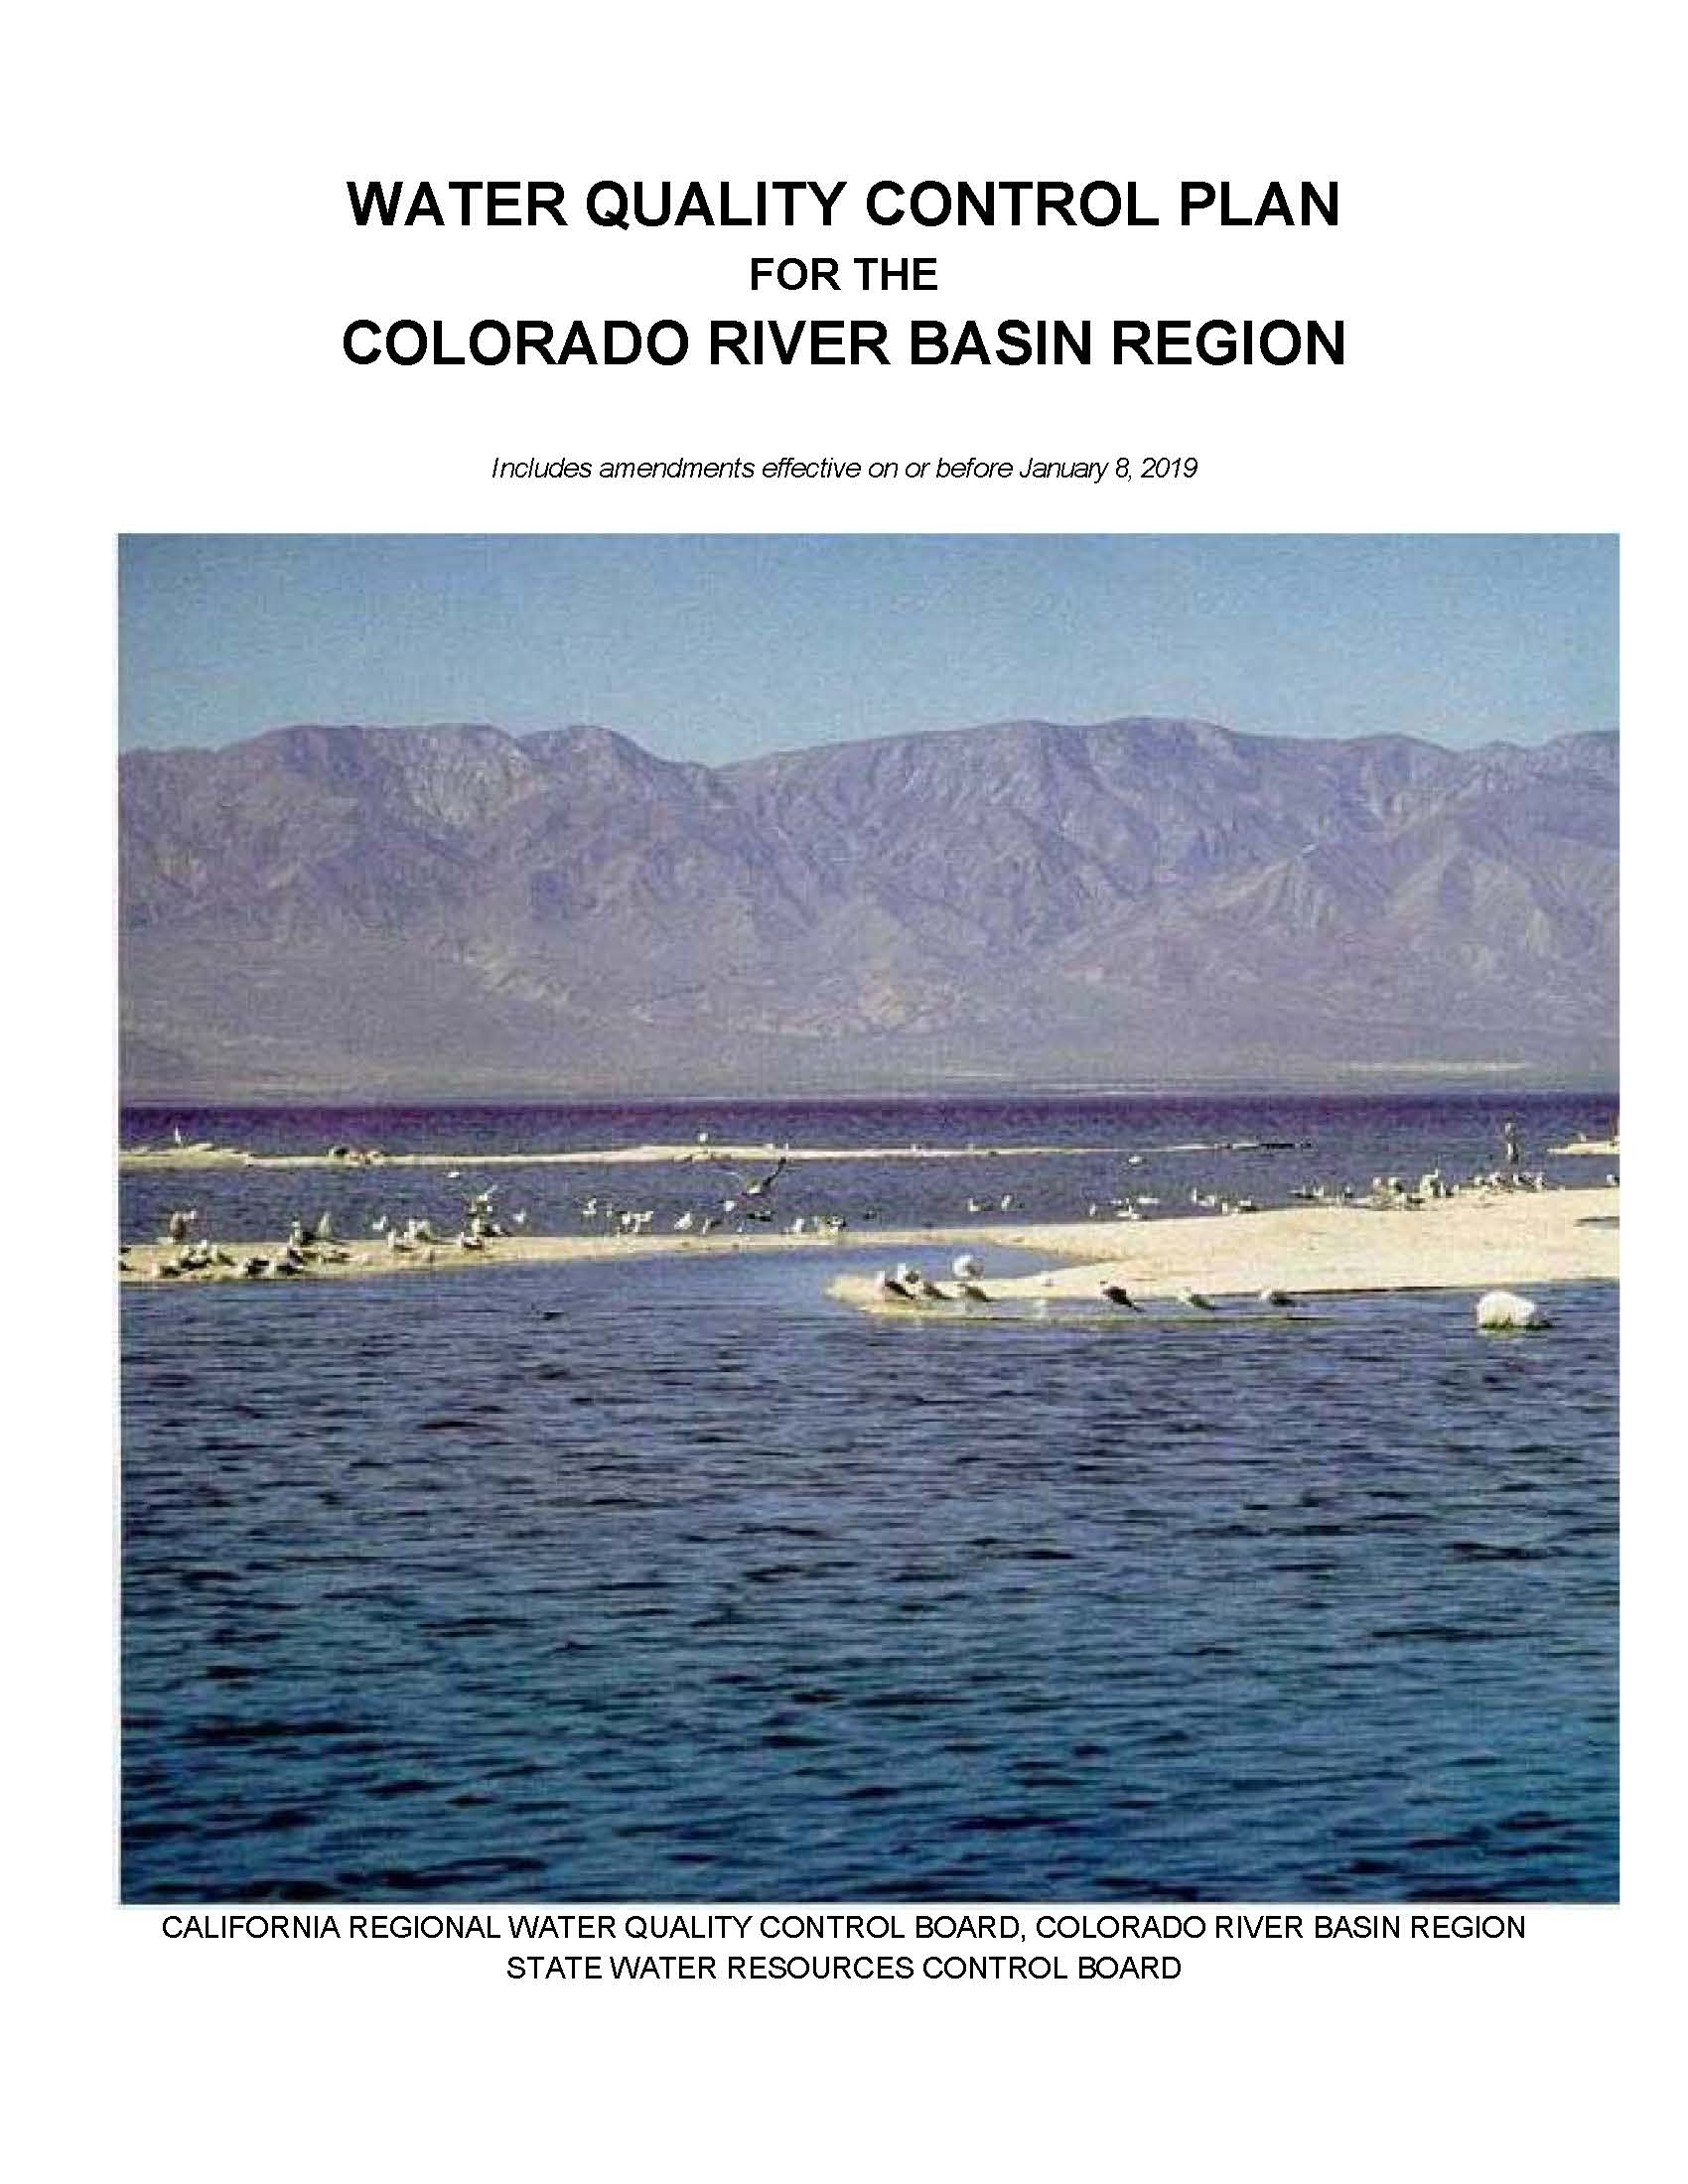 Basin Plan Cover